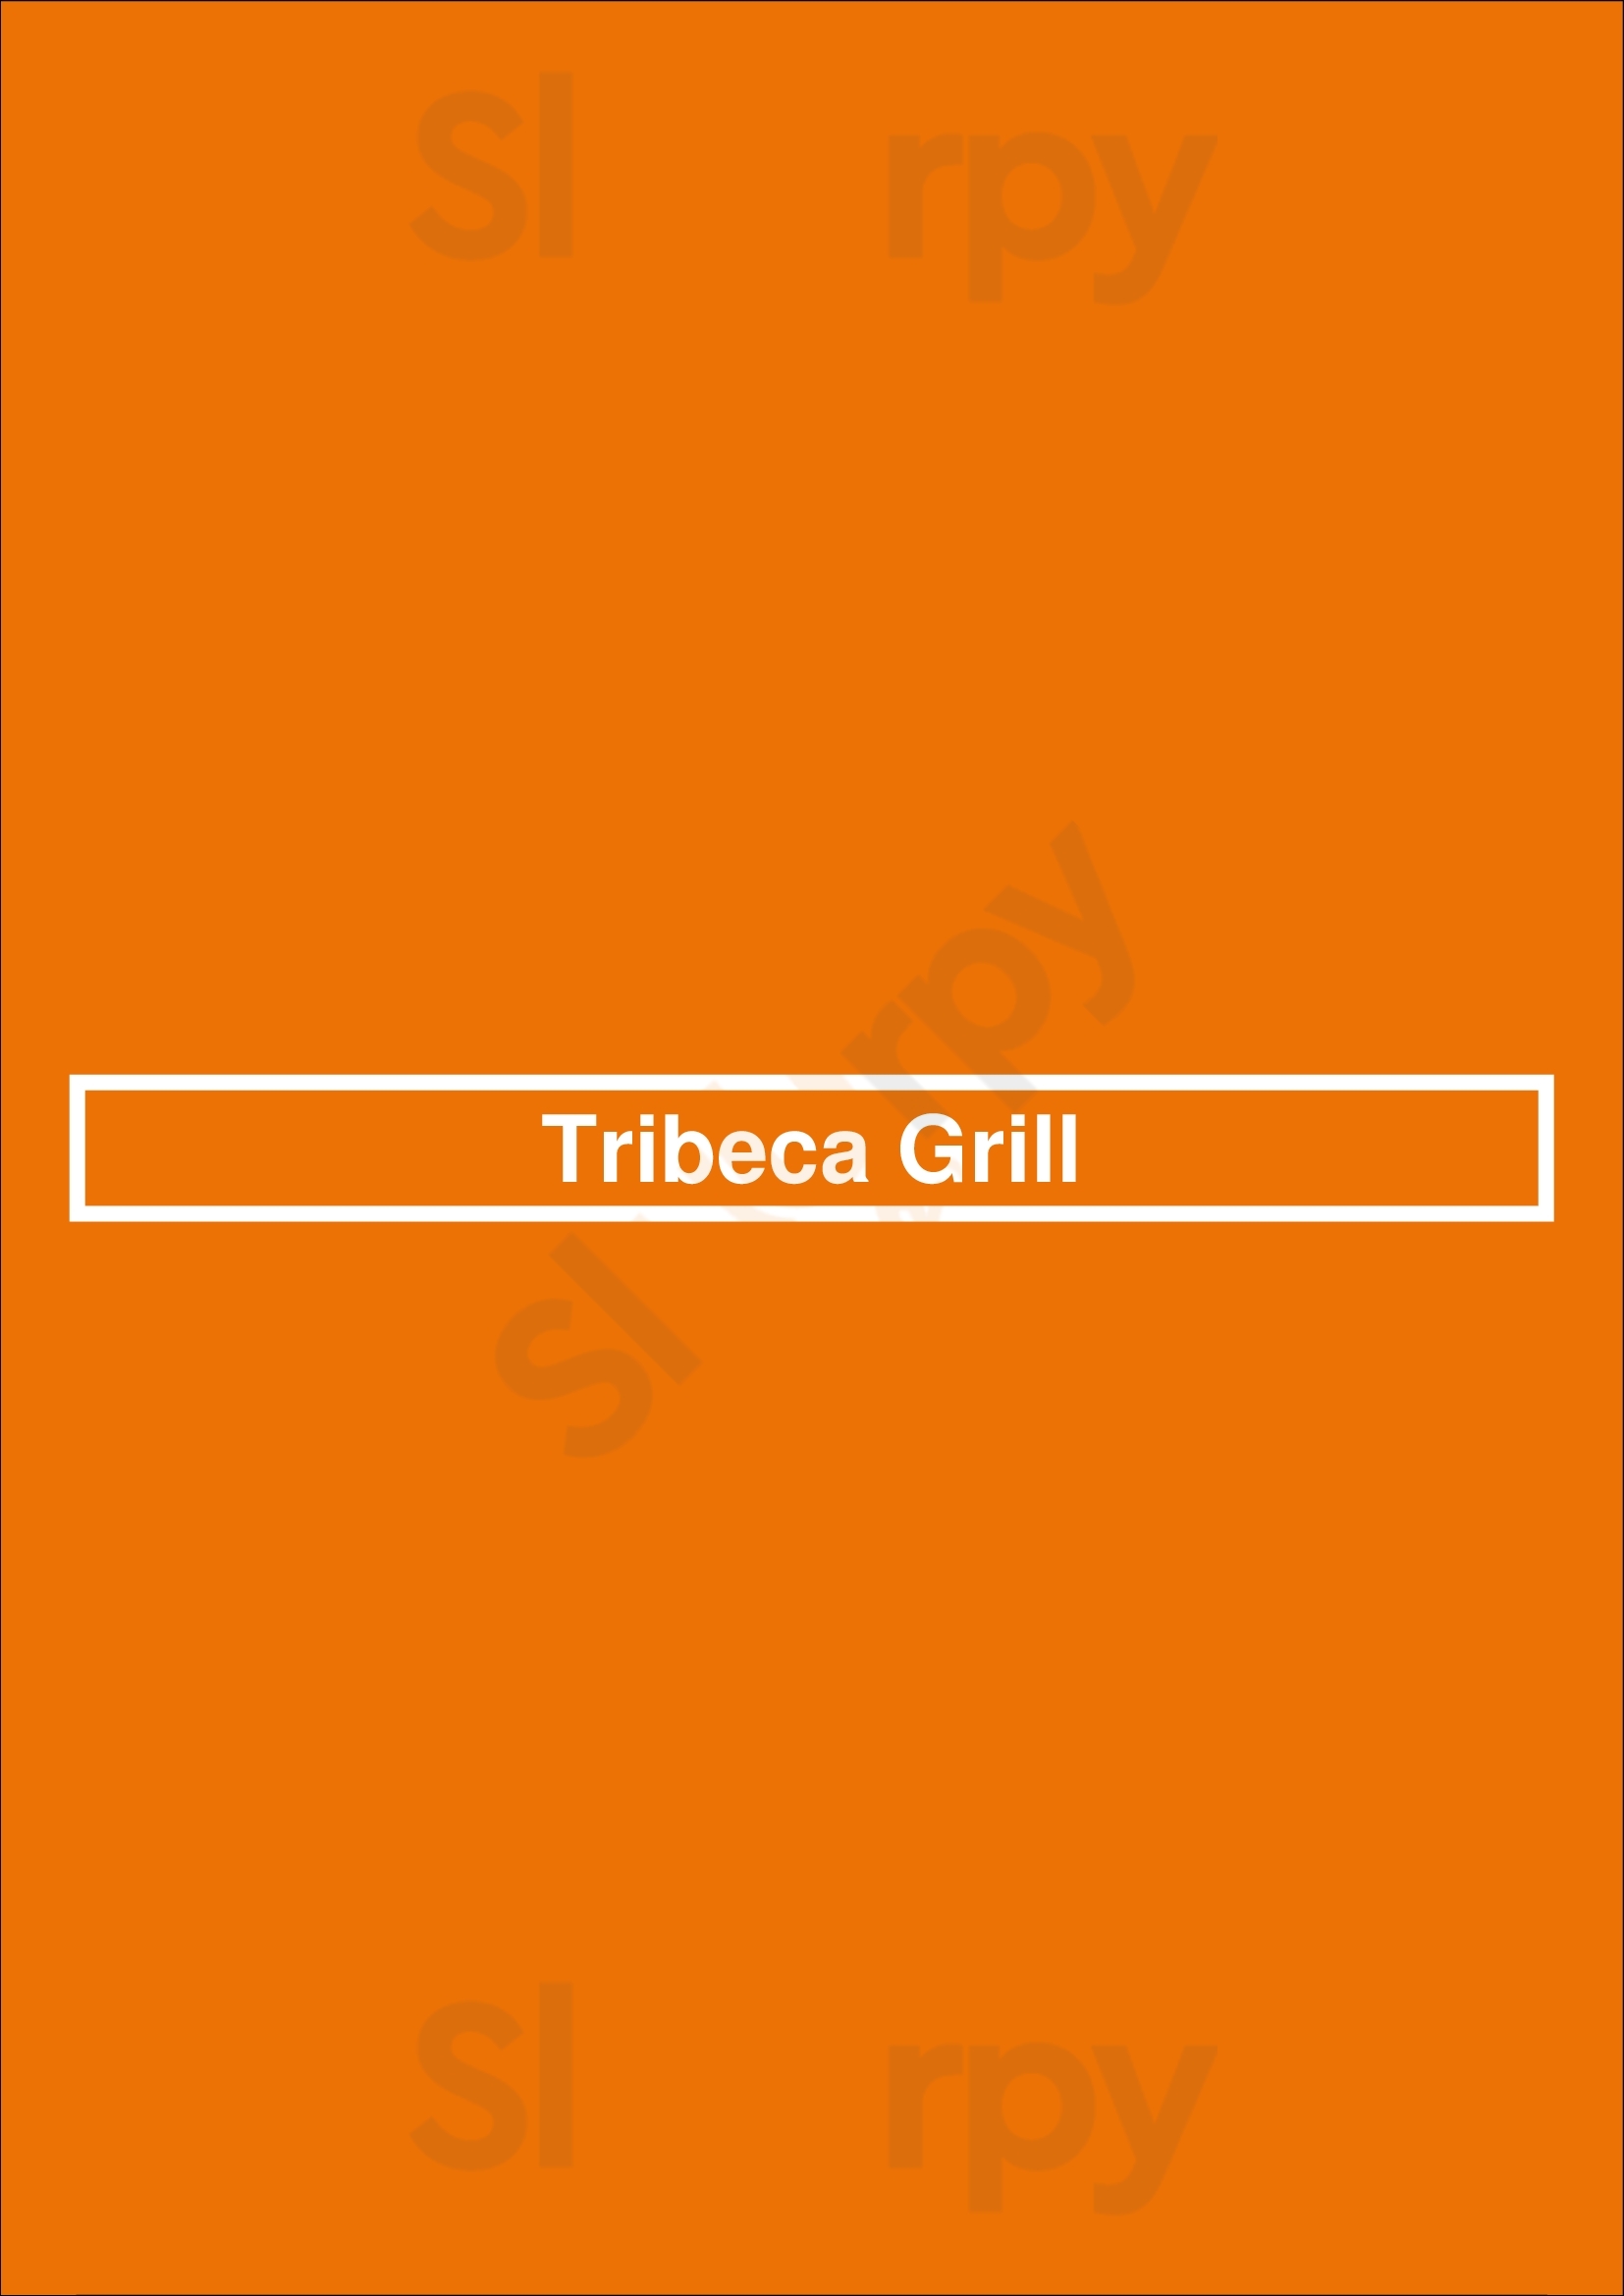 Tribeca Grill New York City Menu - 1